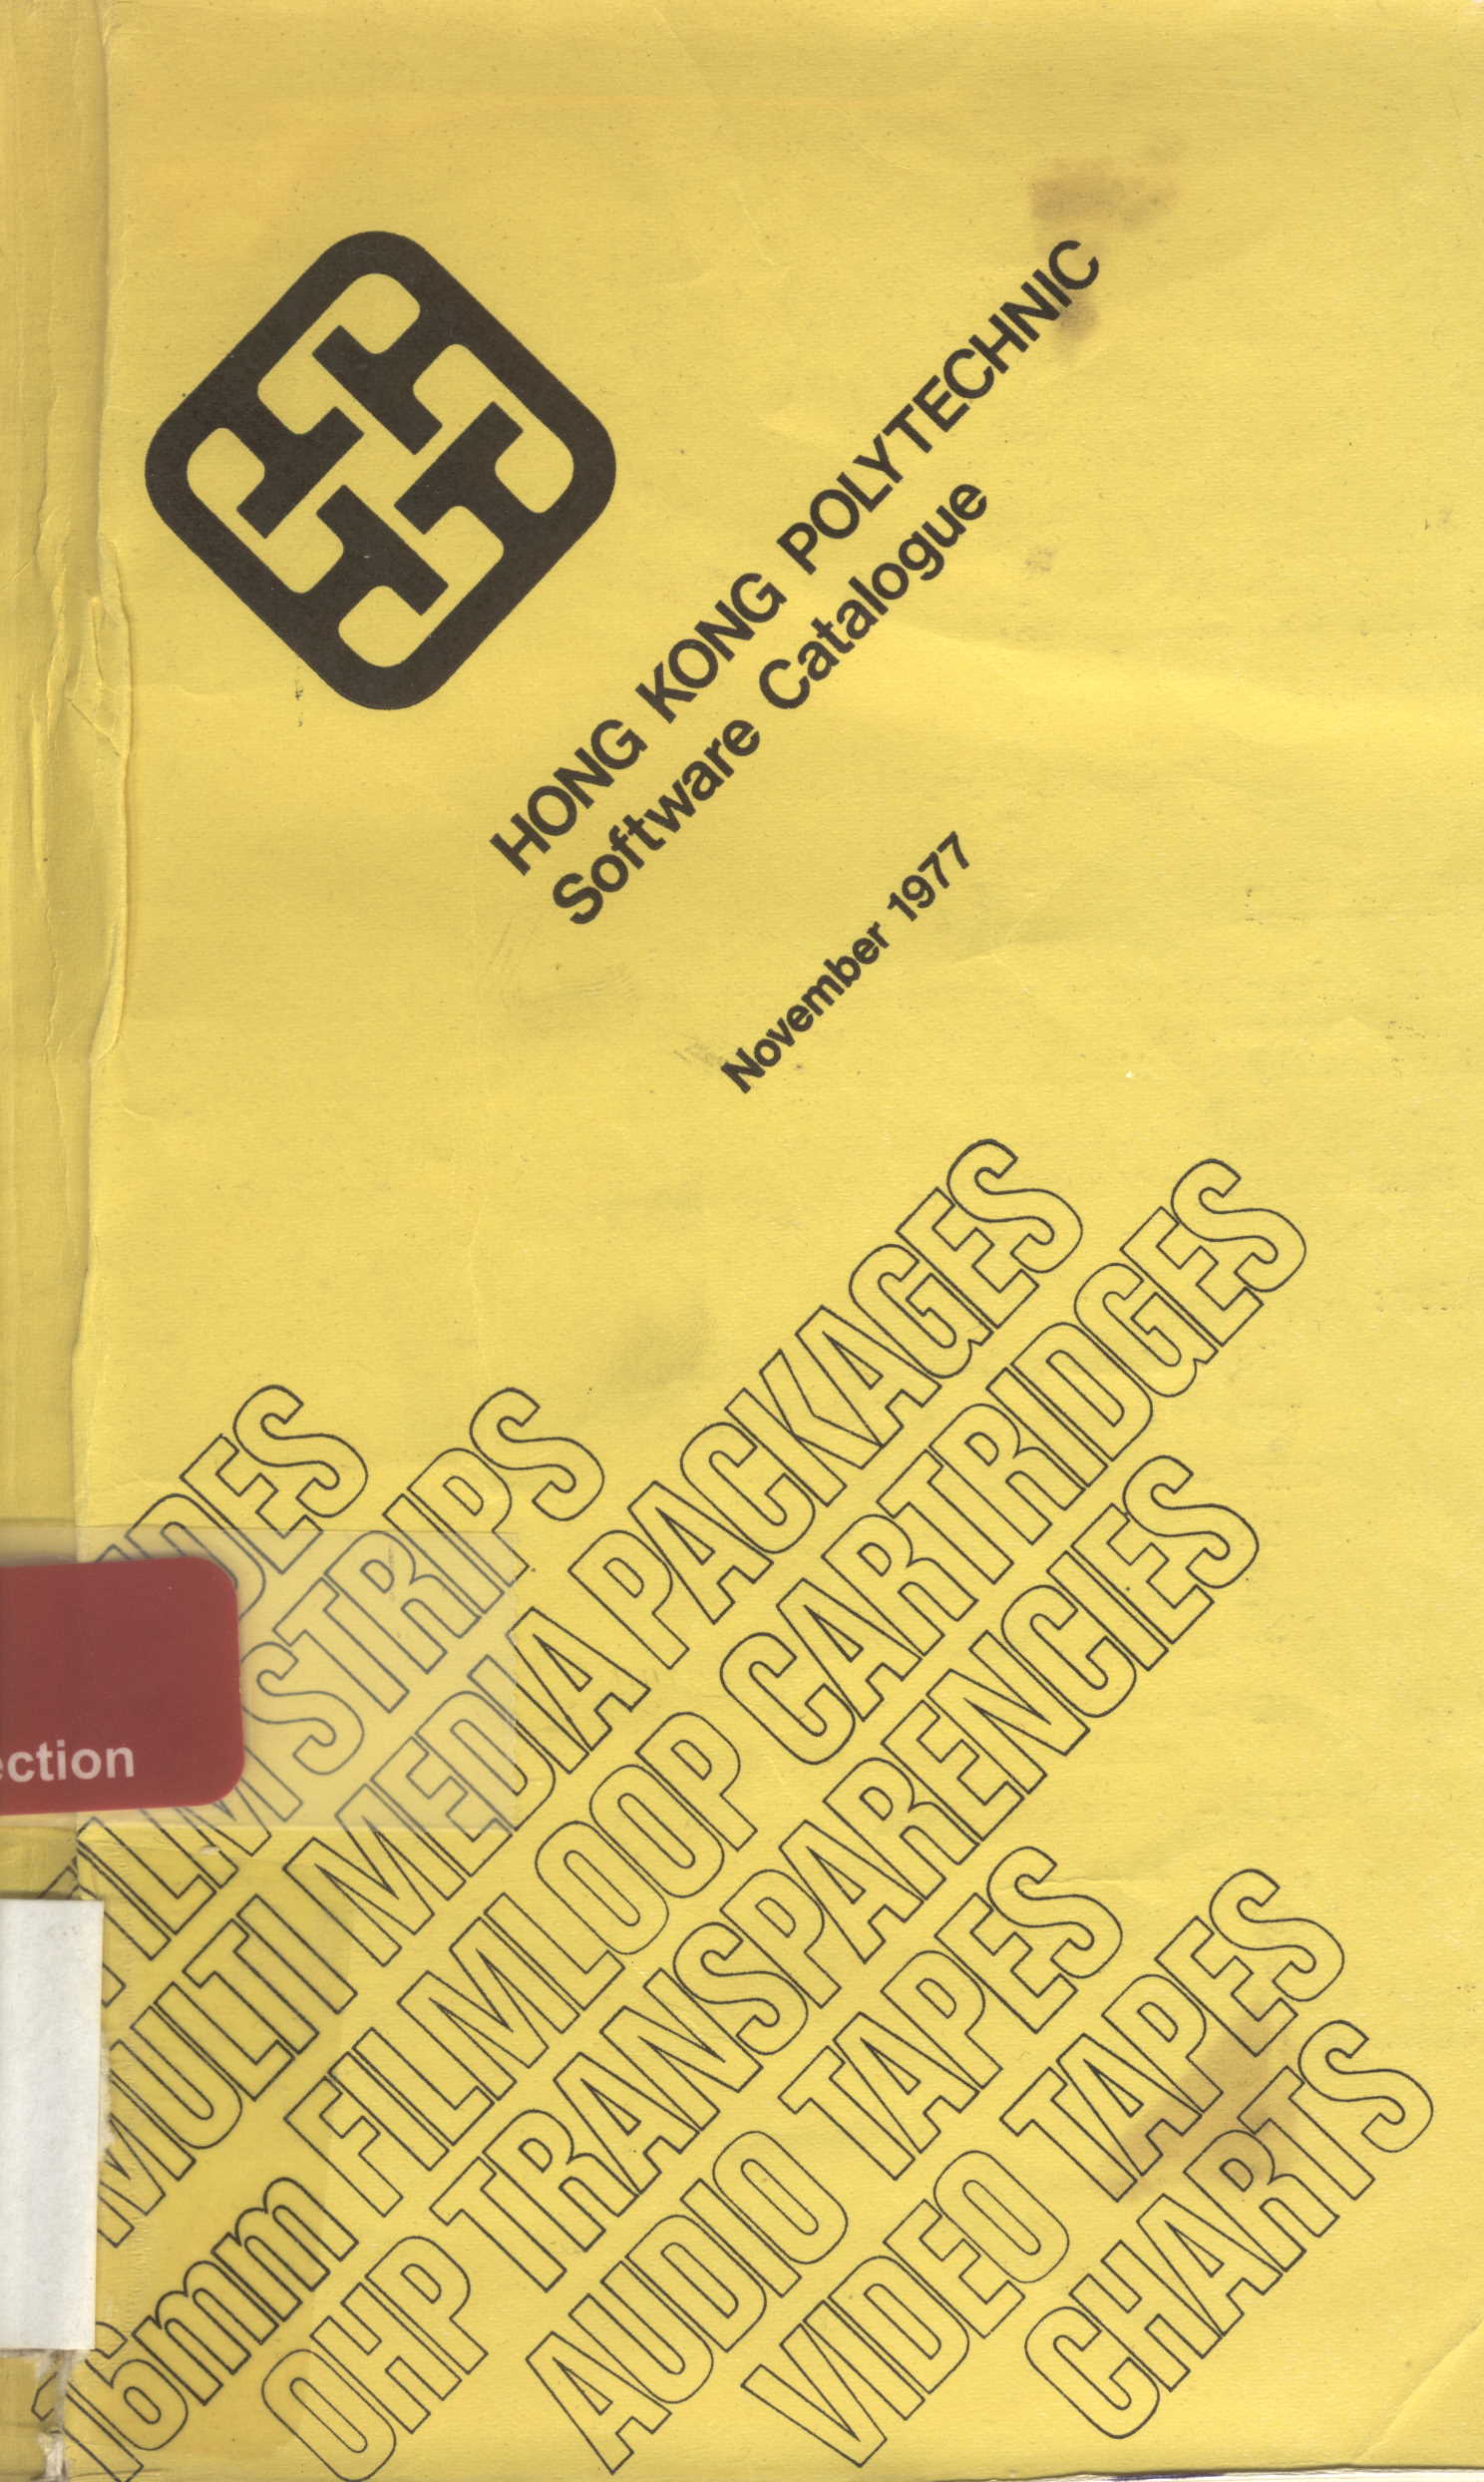 Hong Kong Polytechnic software catalogue. Nov 1977